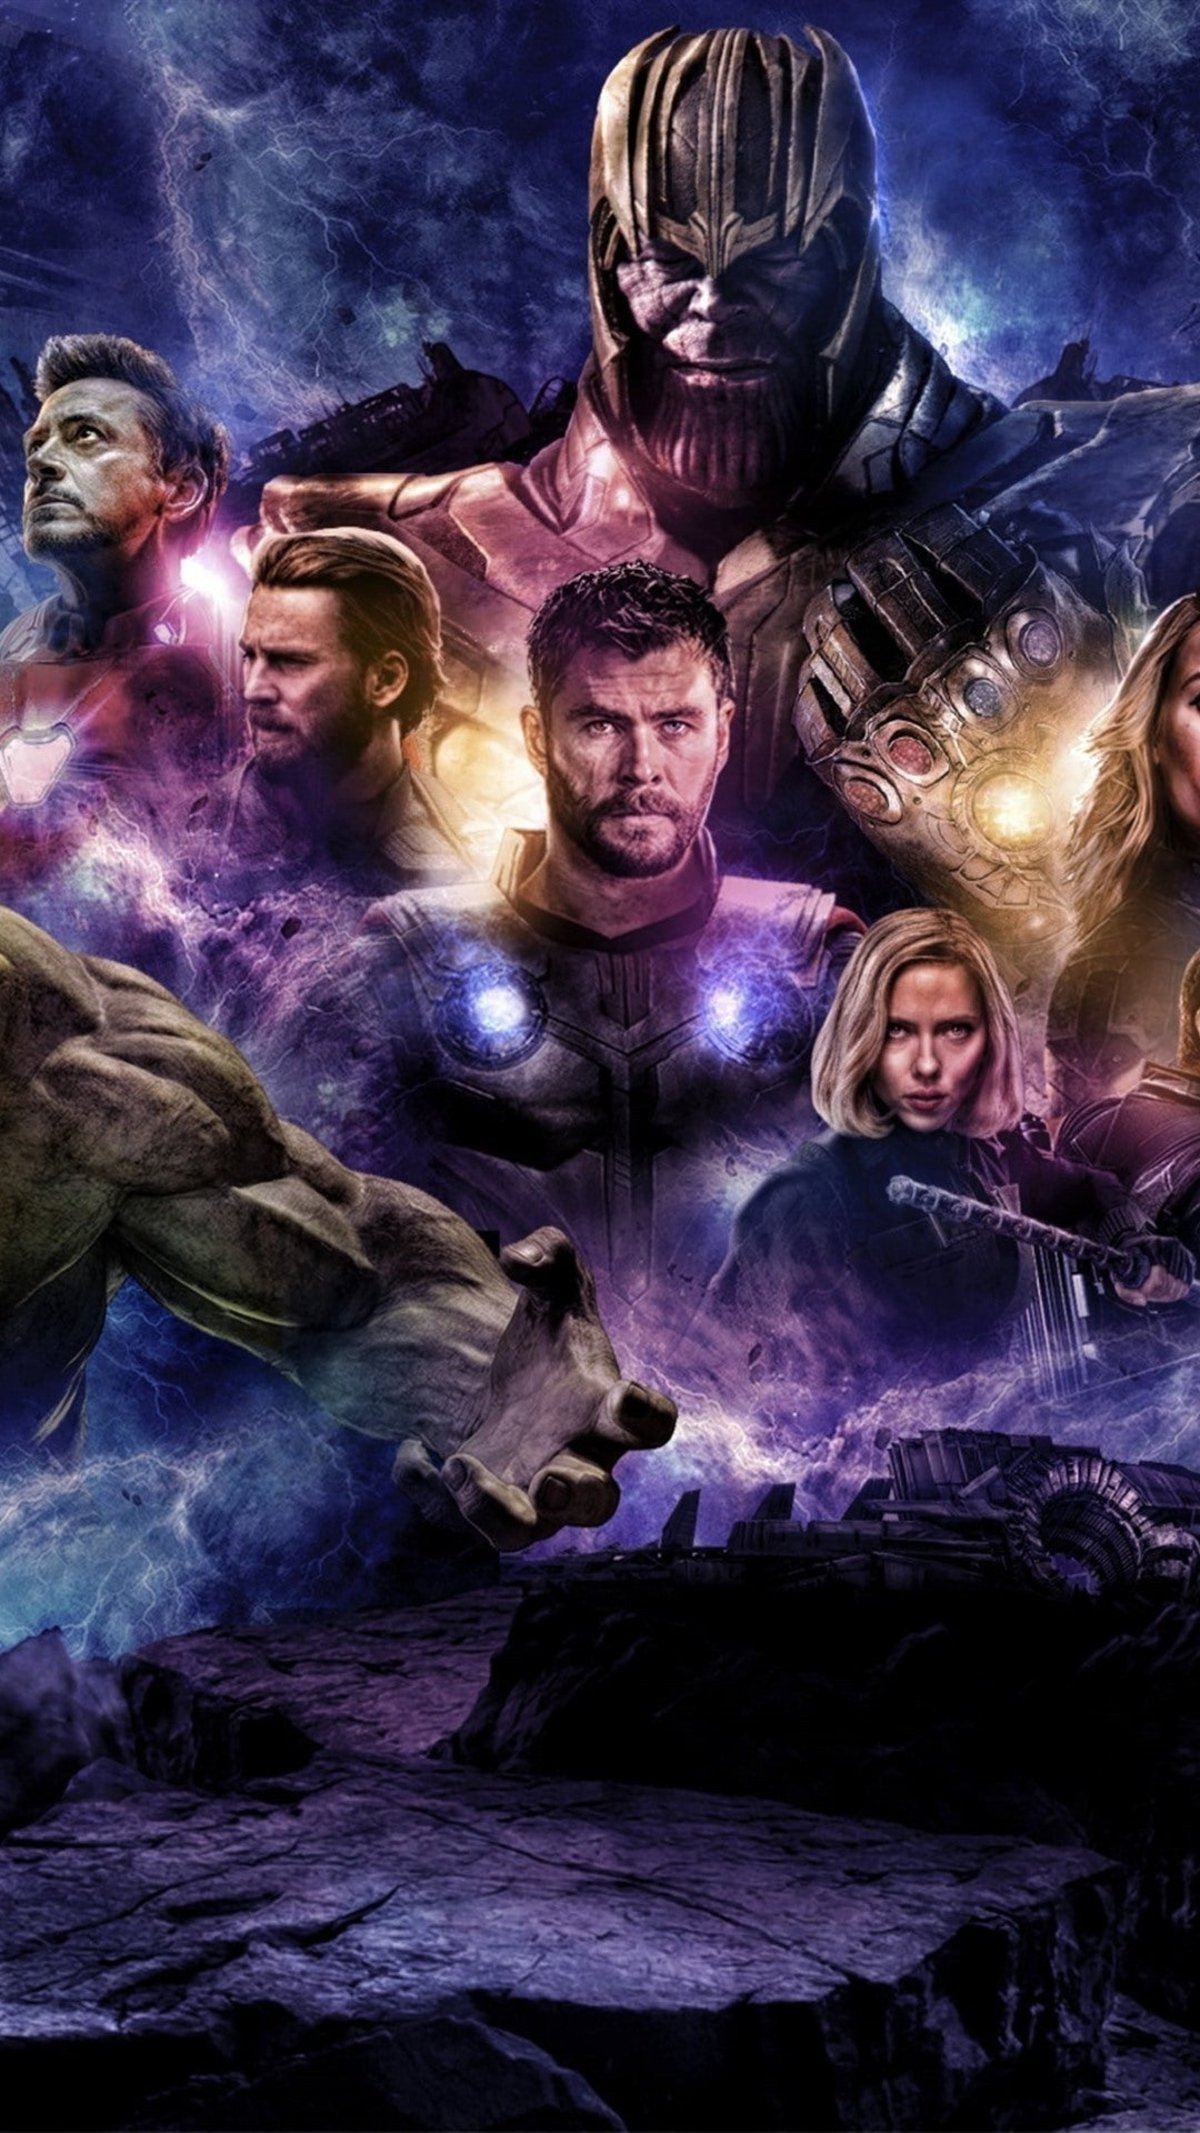 Los mejores fondos de pantalla de Avengers: Endgame